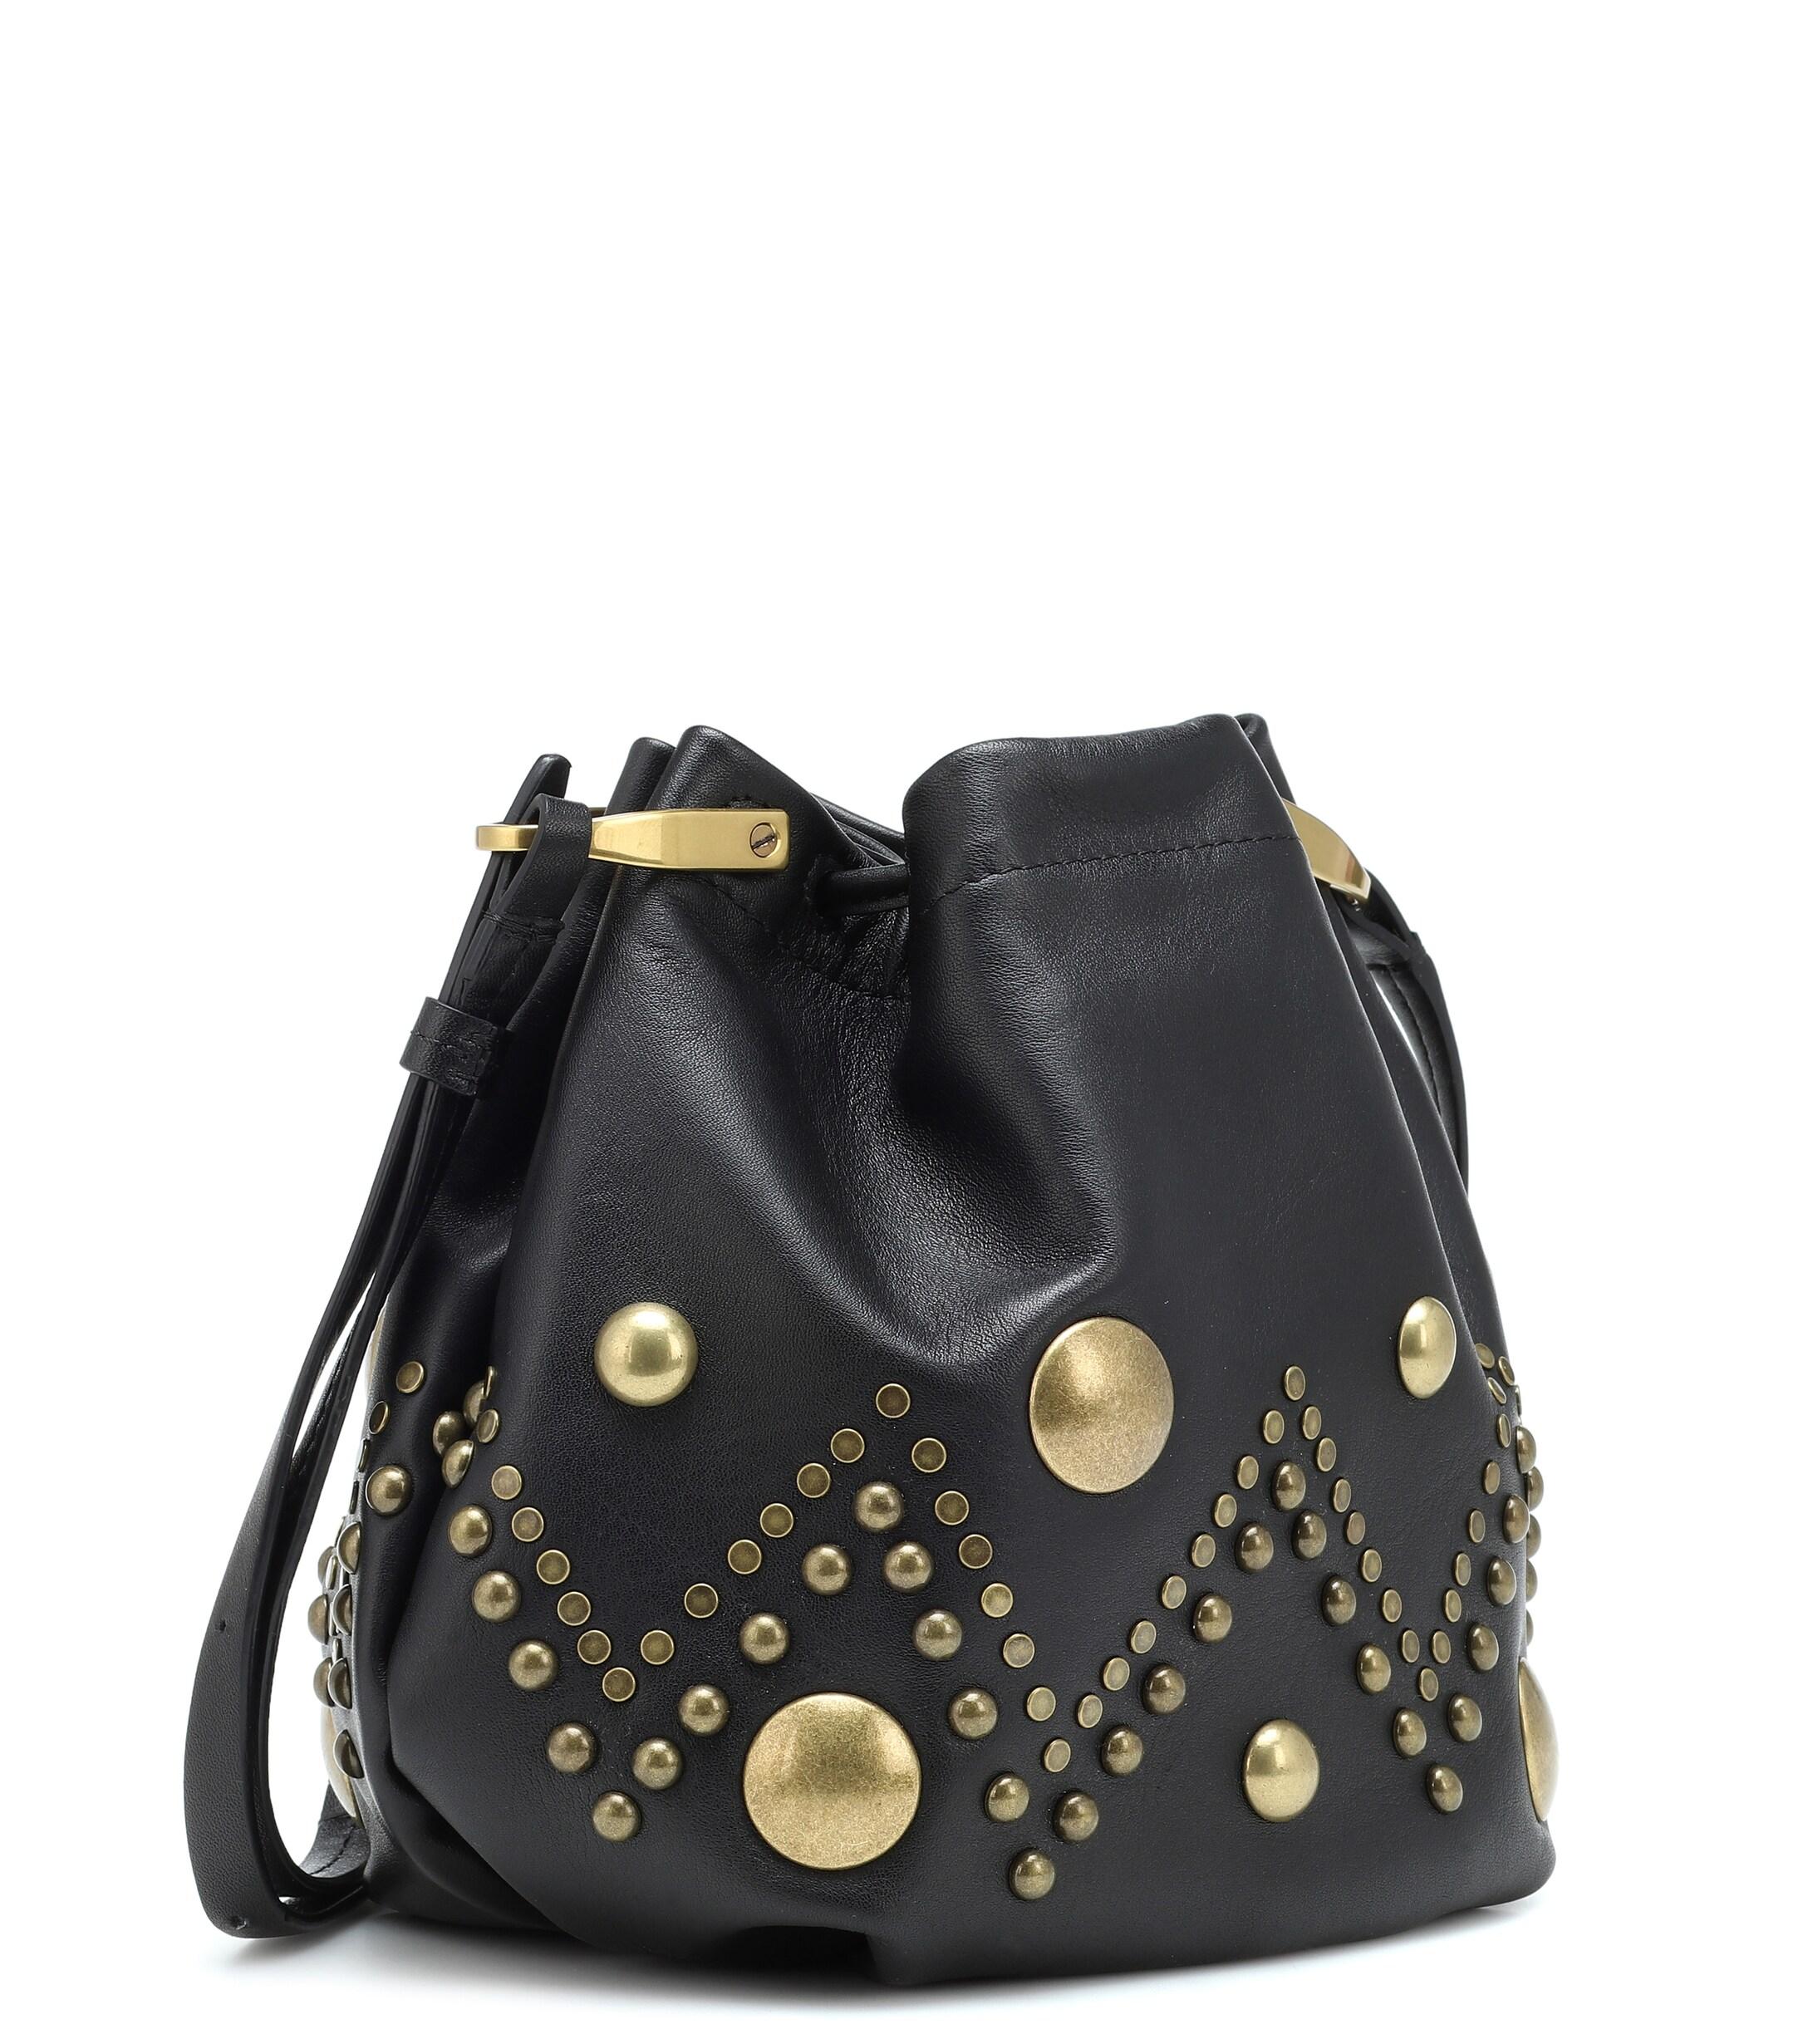 Isabel Marant Kylio Leather Bucket Bag in Black - Lyst